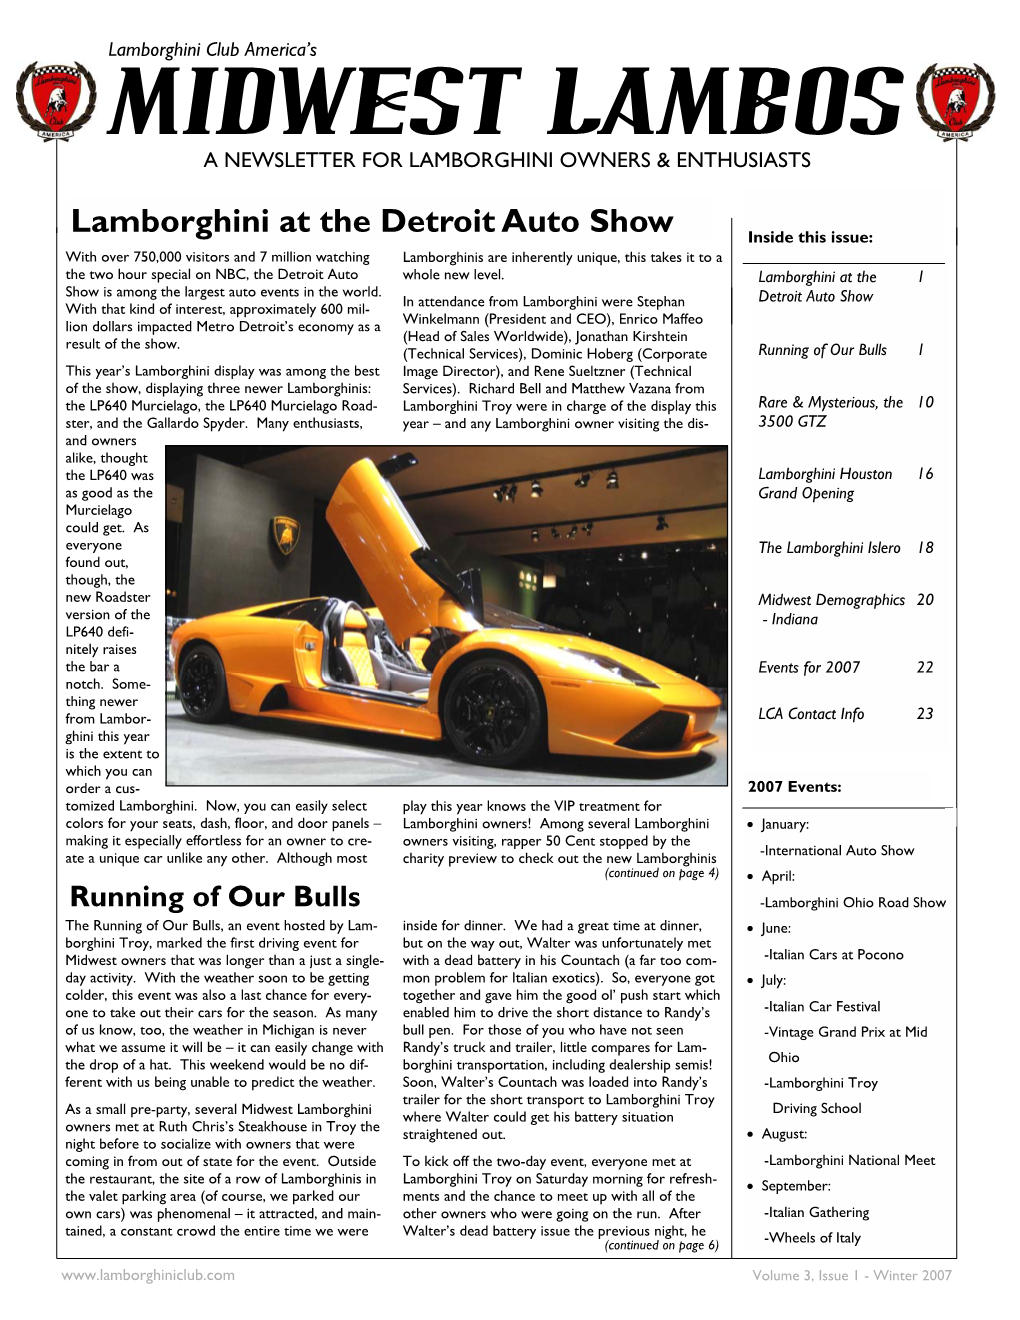 Lamborghini Club America’S MIDWEST LAMBOS a NEWSLETTER for LAMBORGHINI OWNERS & ENTHUSIASTS